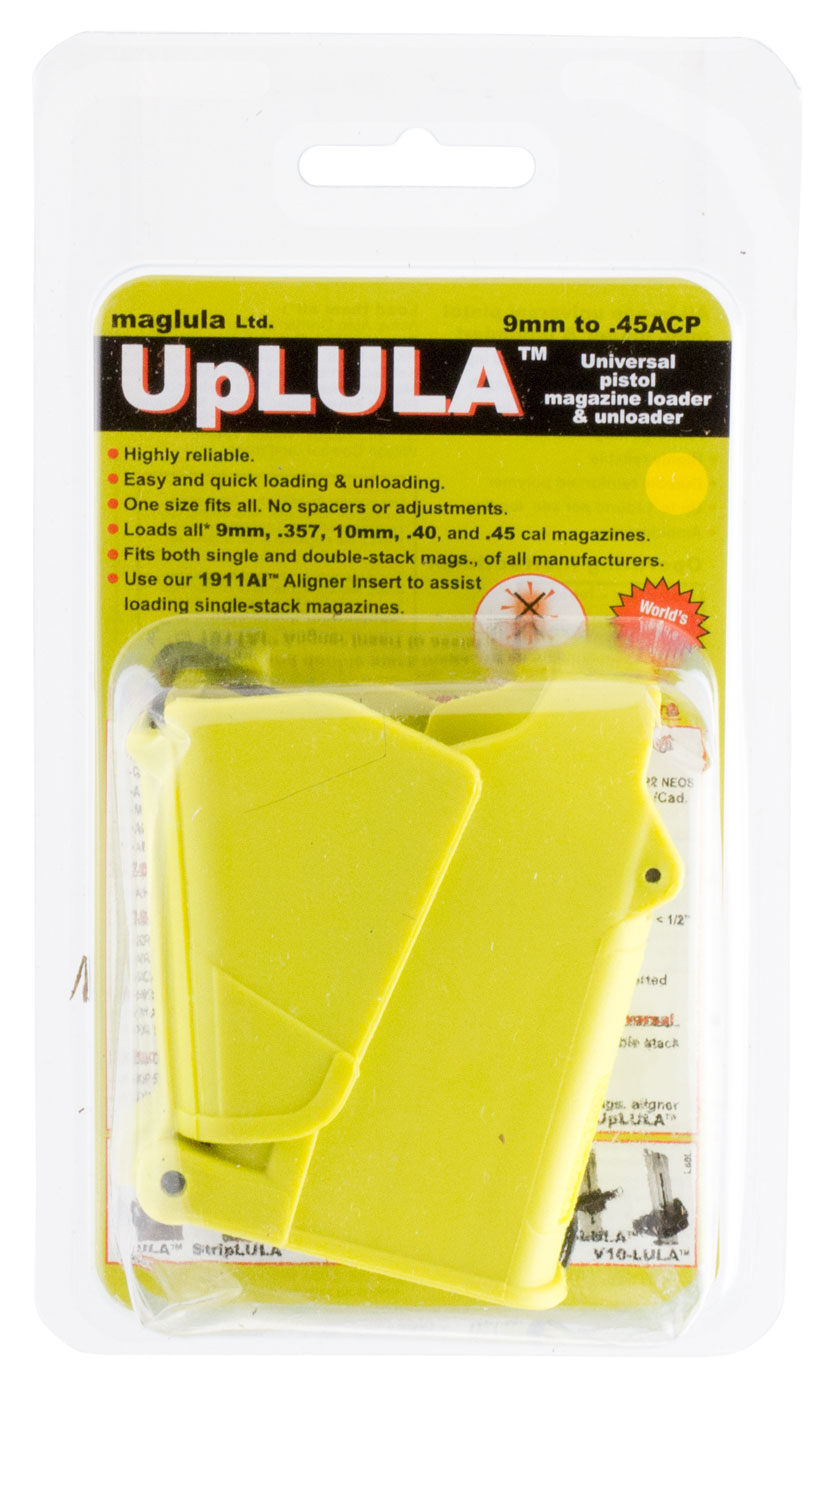 Maglula UP60L UpLULA Loader & Unloader Double & Single Stack Style made of Polymer with Lemon Finish for 9mm Luger, 45 ACP Pistols